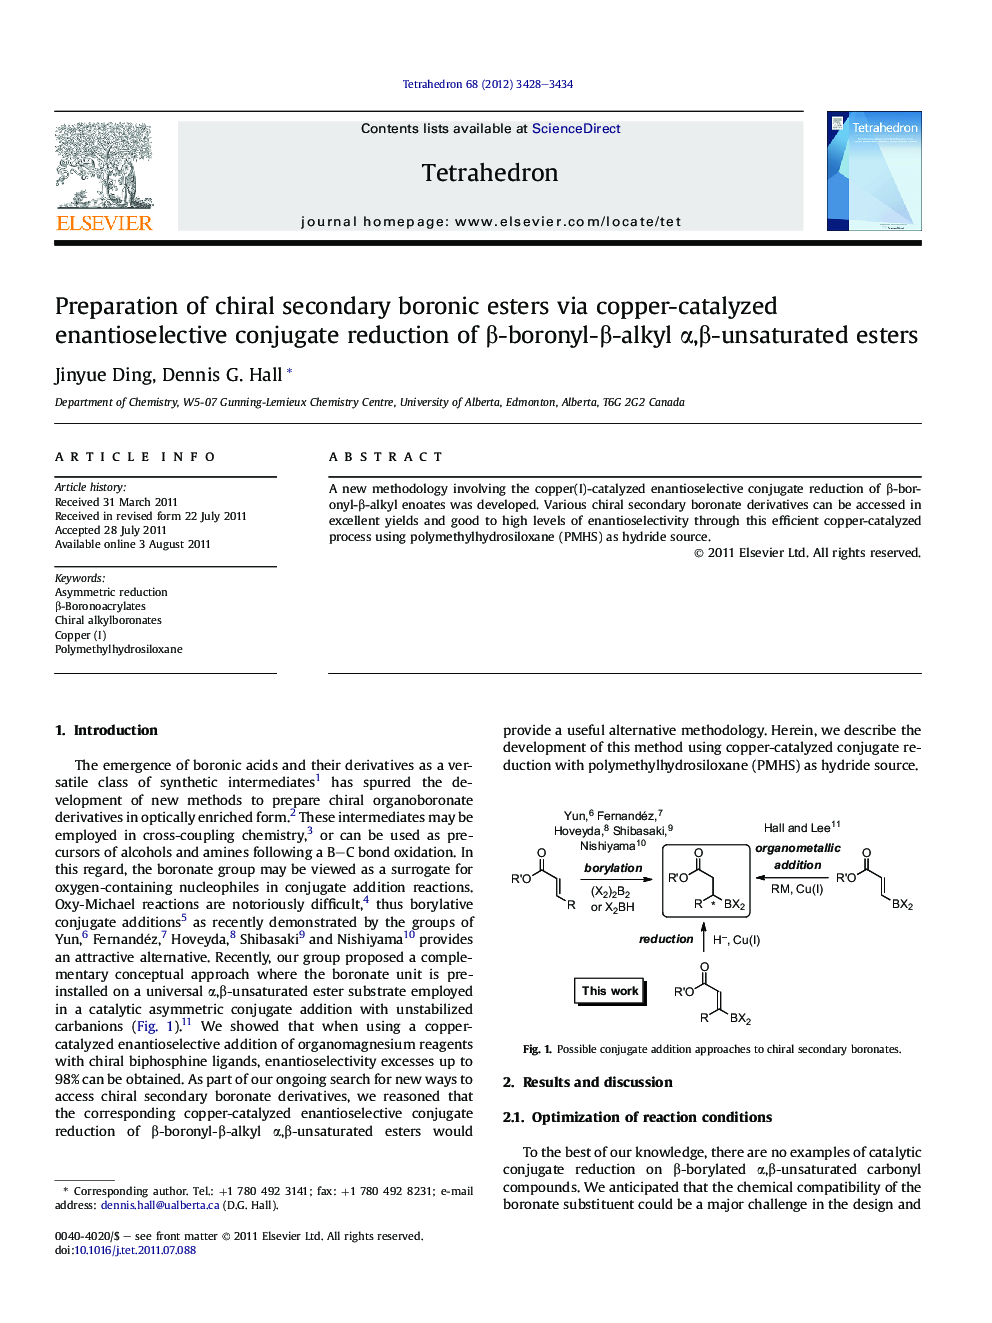 Preparation of chiral secondary boronic esters via copper-catalyzed enantioselective conjugate reduction of Î²-boronyl-Î²-alkyl Î±,Î²-unsaturated esters